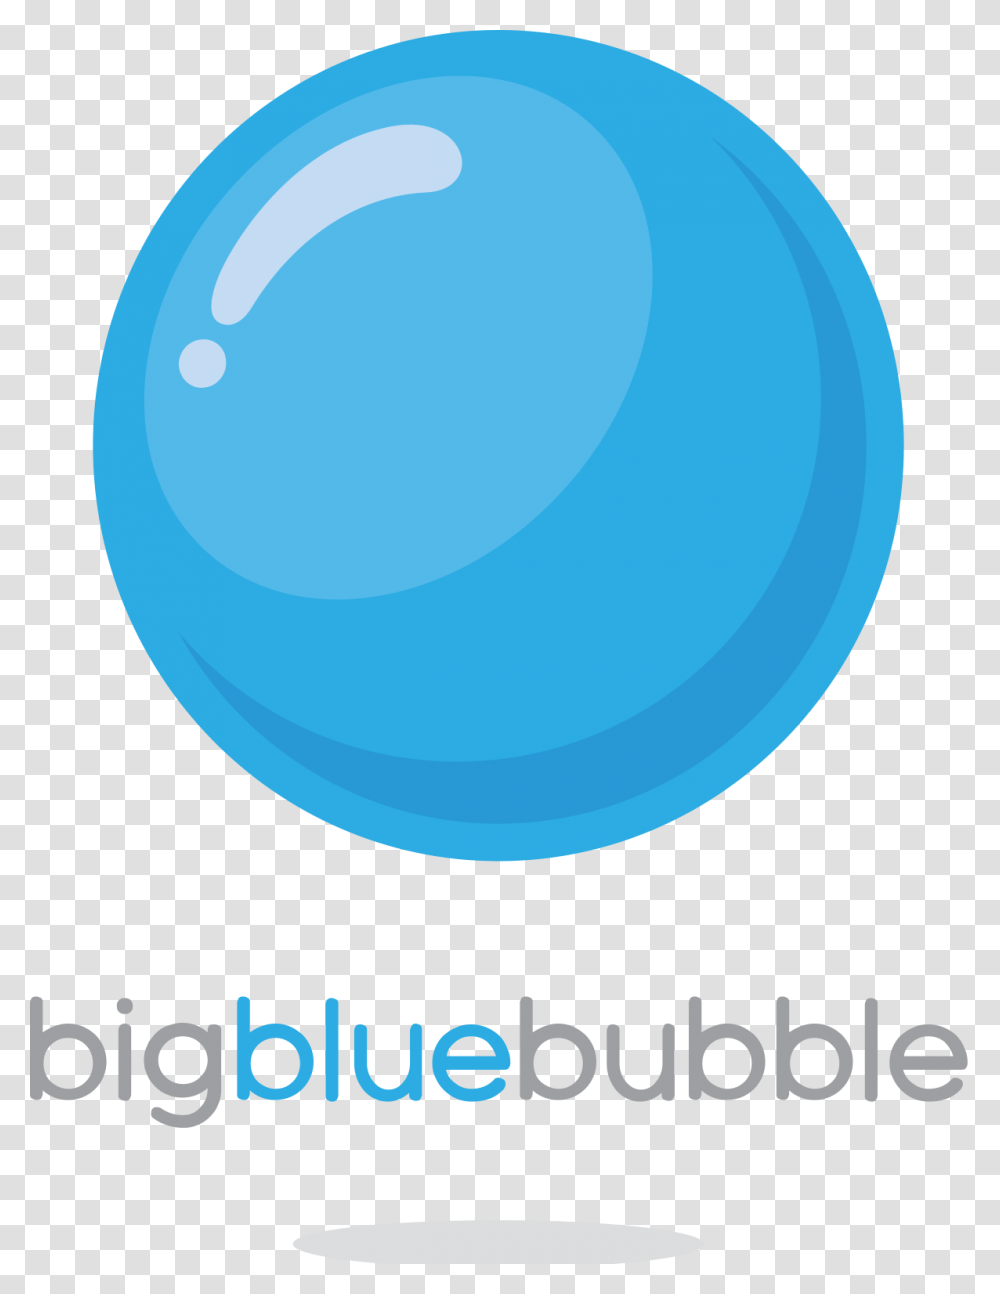 Image, Sphere, Ball, Bubble Transparent Png